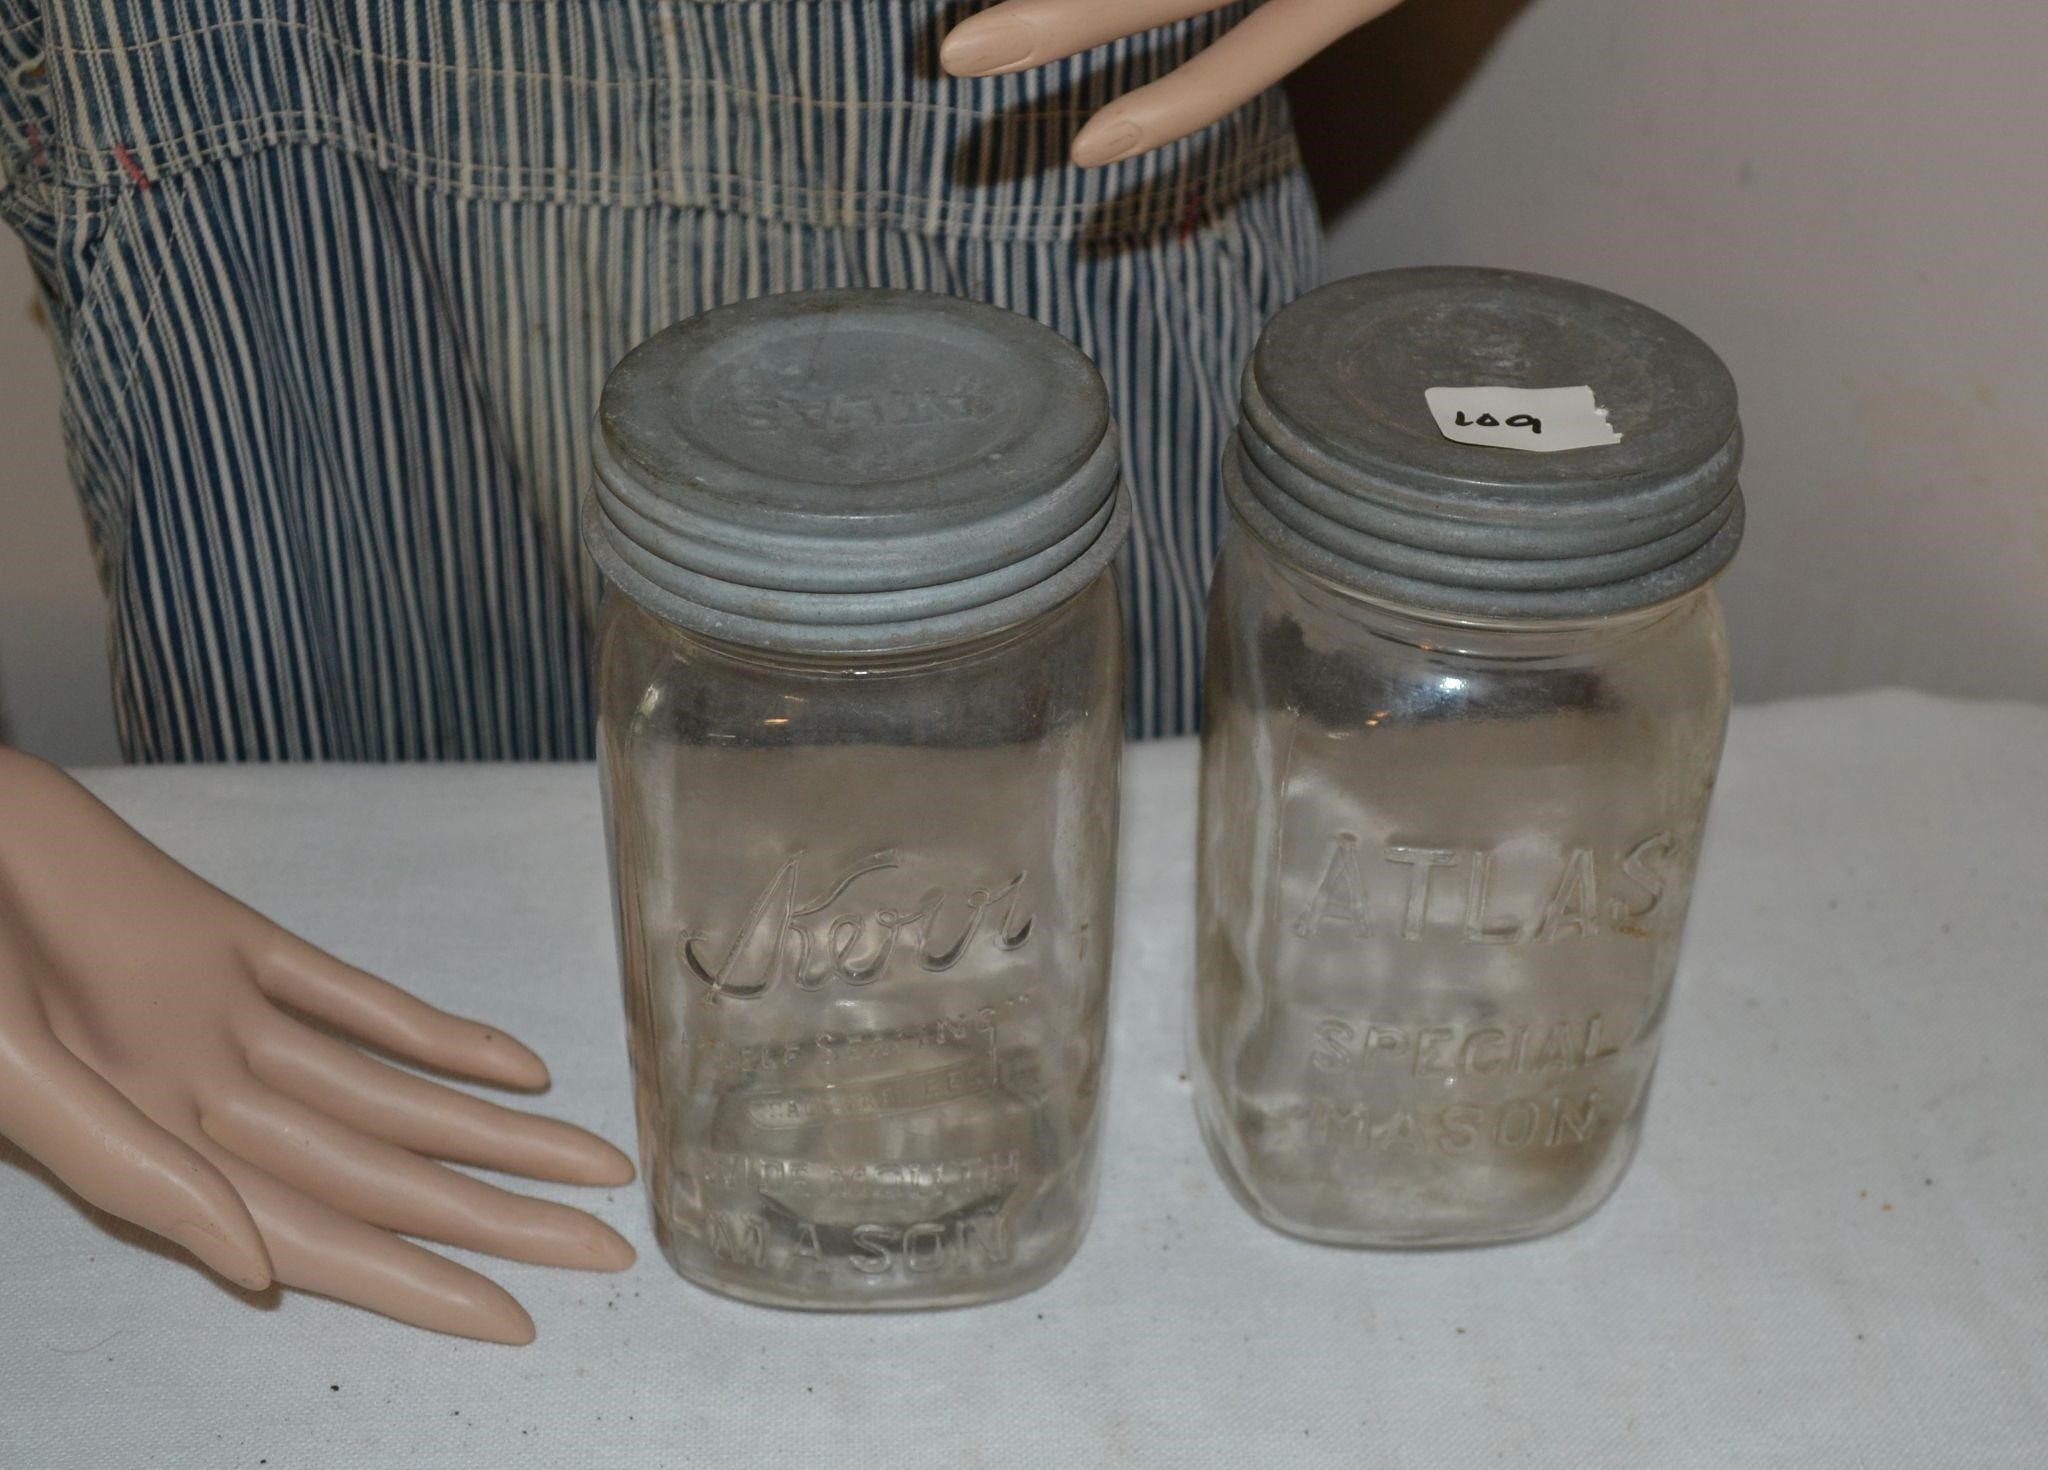 2 Mason Jars with Zinc Lids - both Atlas lids